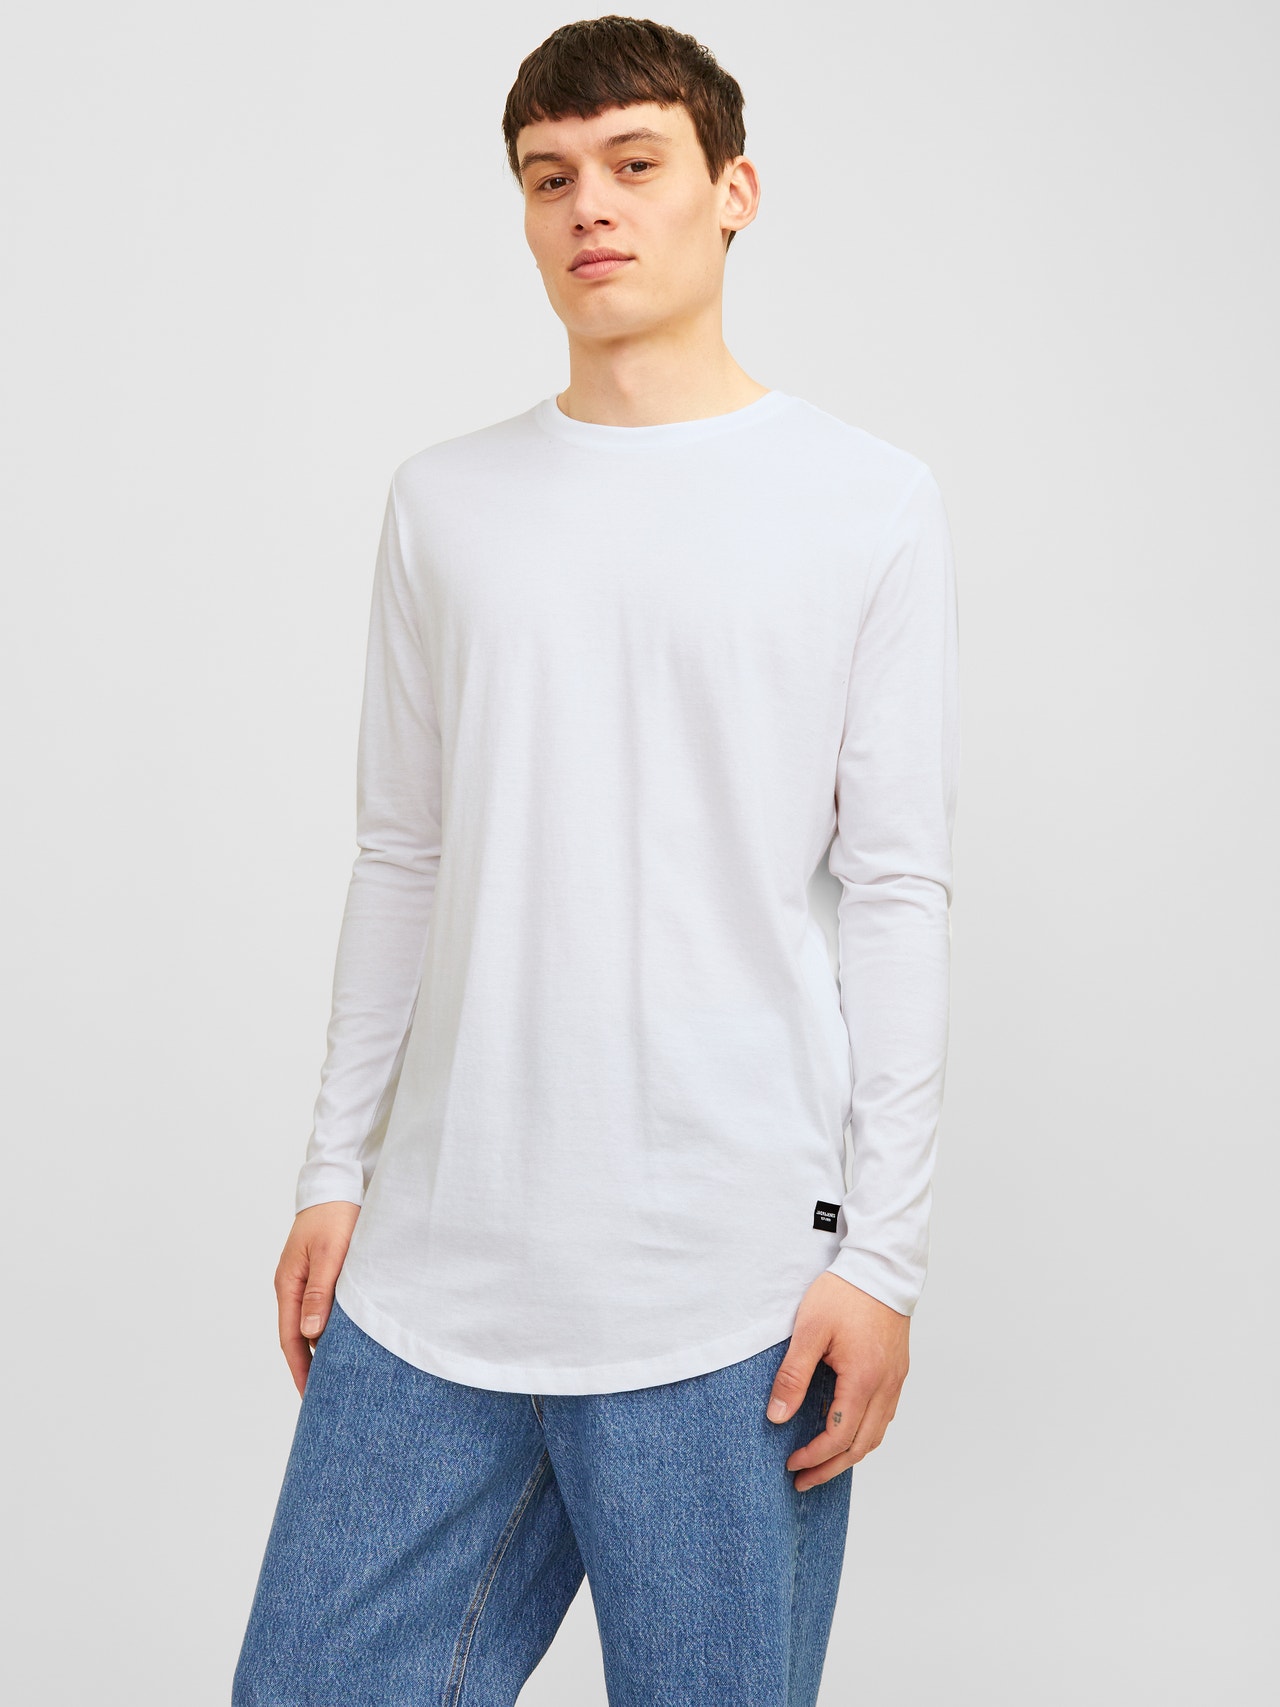 Jack & Jones Long Line Fit O-Neck Noa T-Shirt -White - 12190128